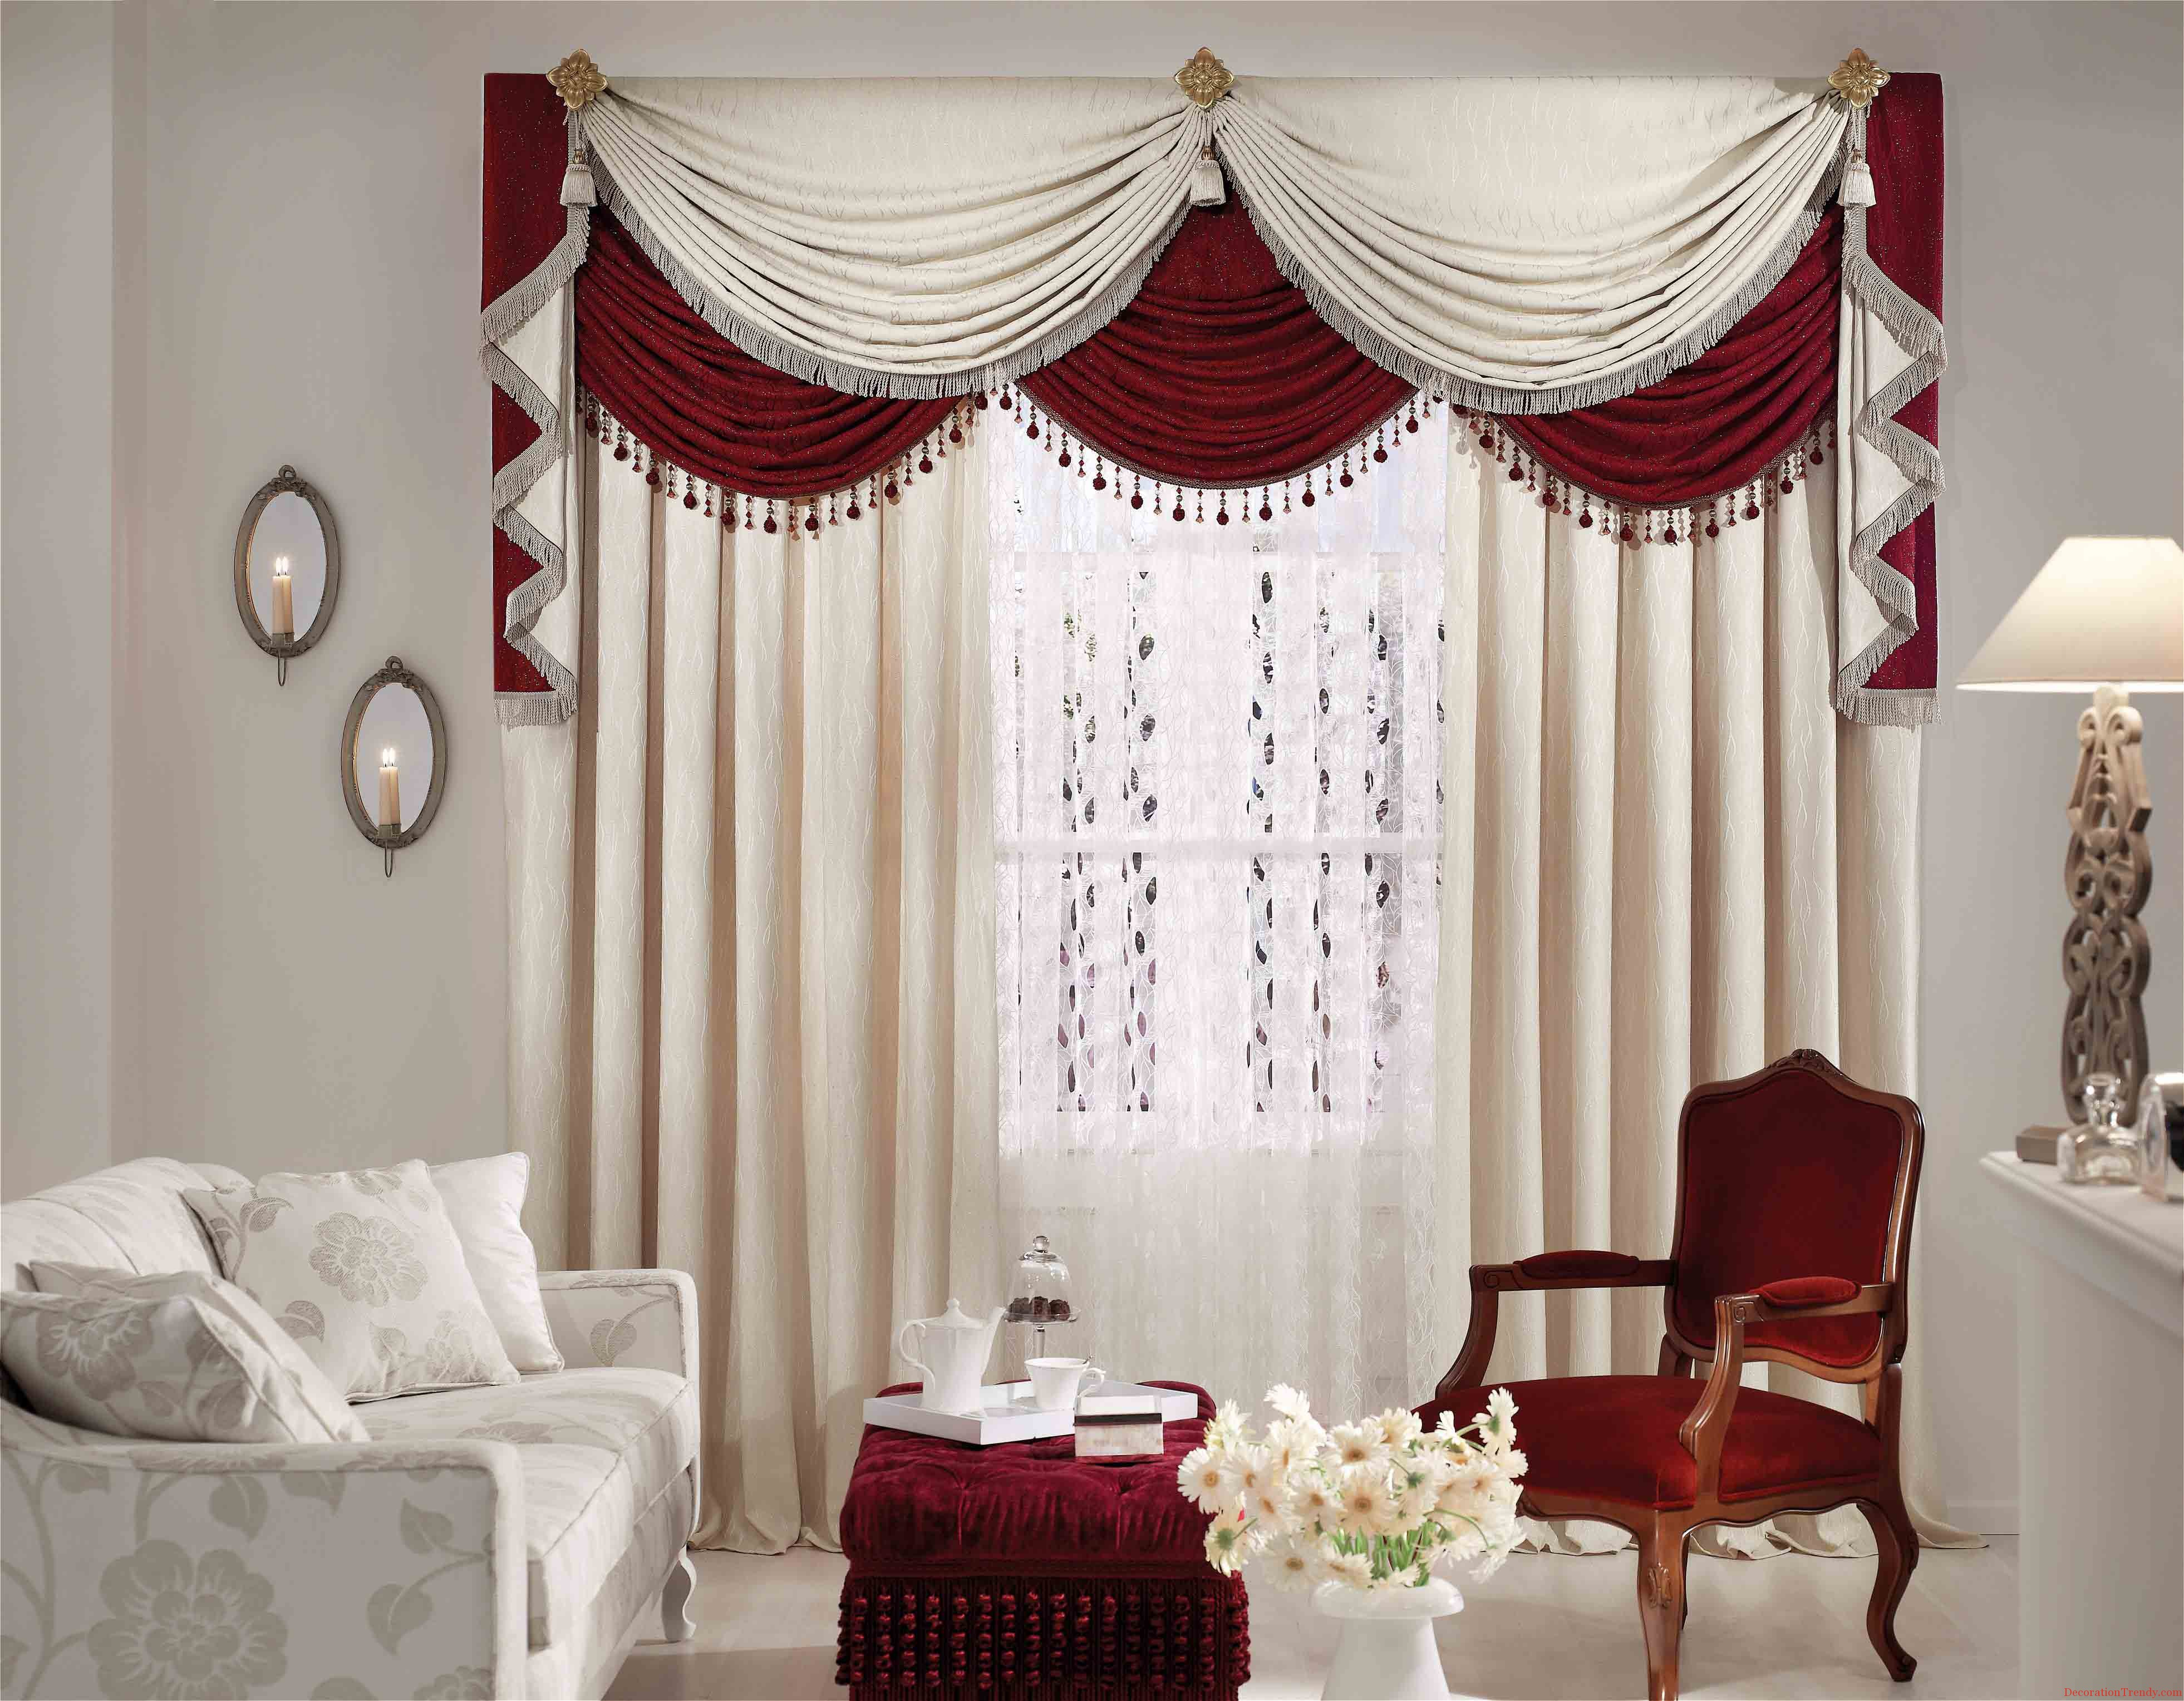 Go For A Beautiful Curtain Design